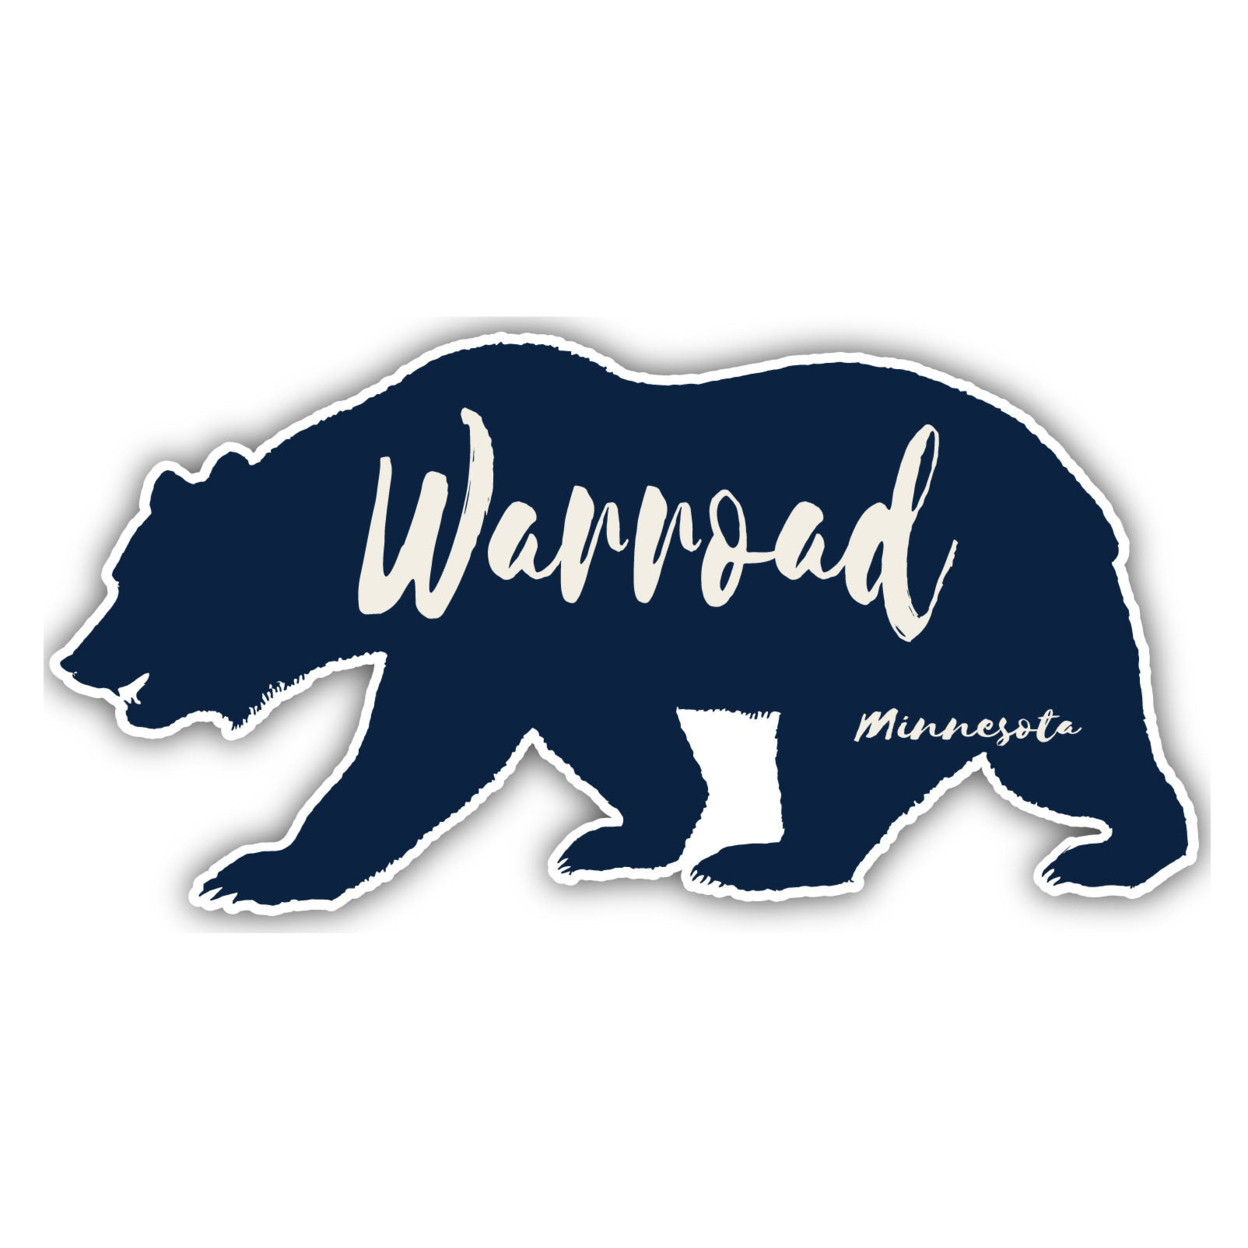 Warroad Minnesota Souvenir Decorative Stickers (Choose Theme And Size) - Single Unit, 2-Inch, Bear